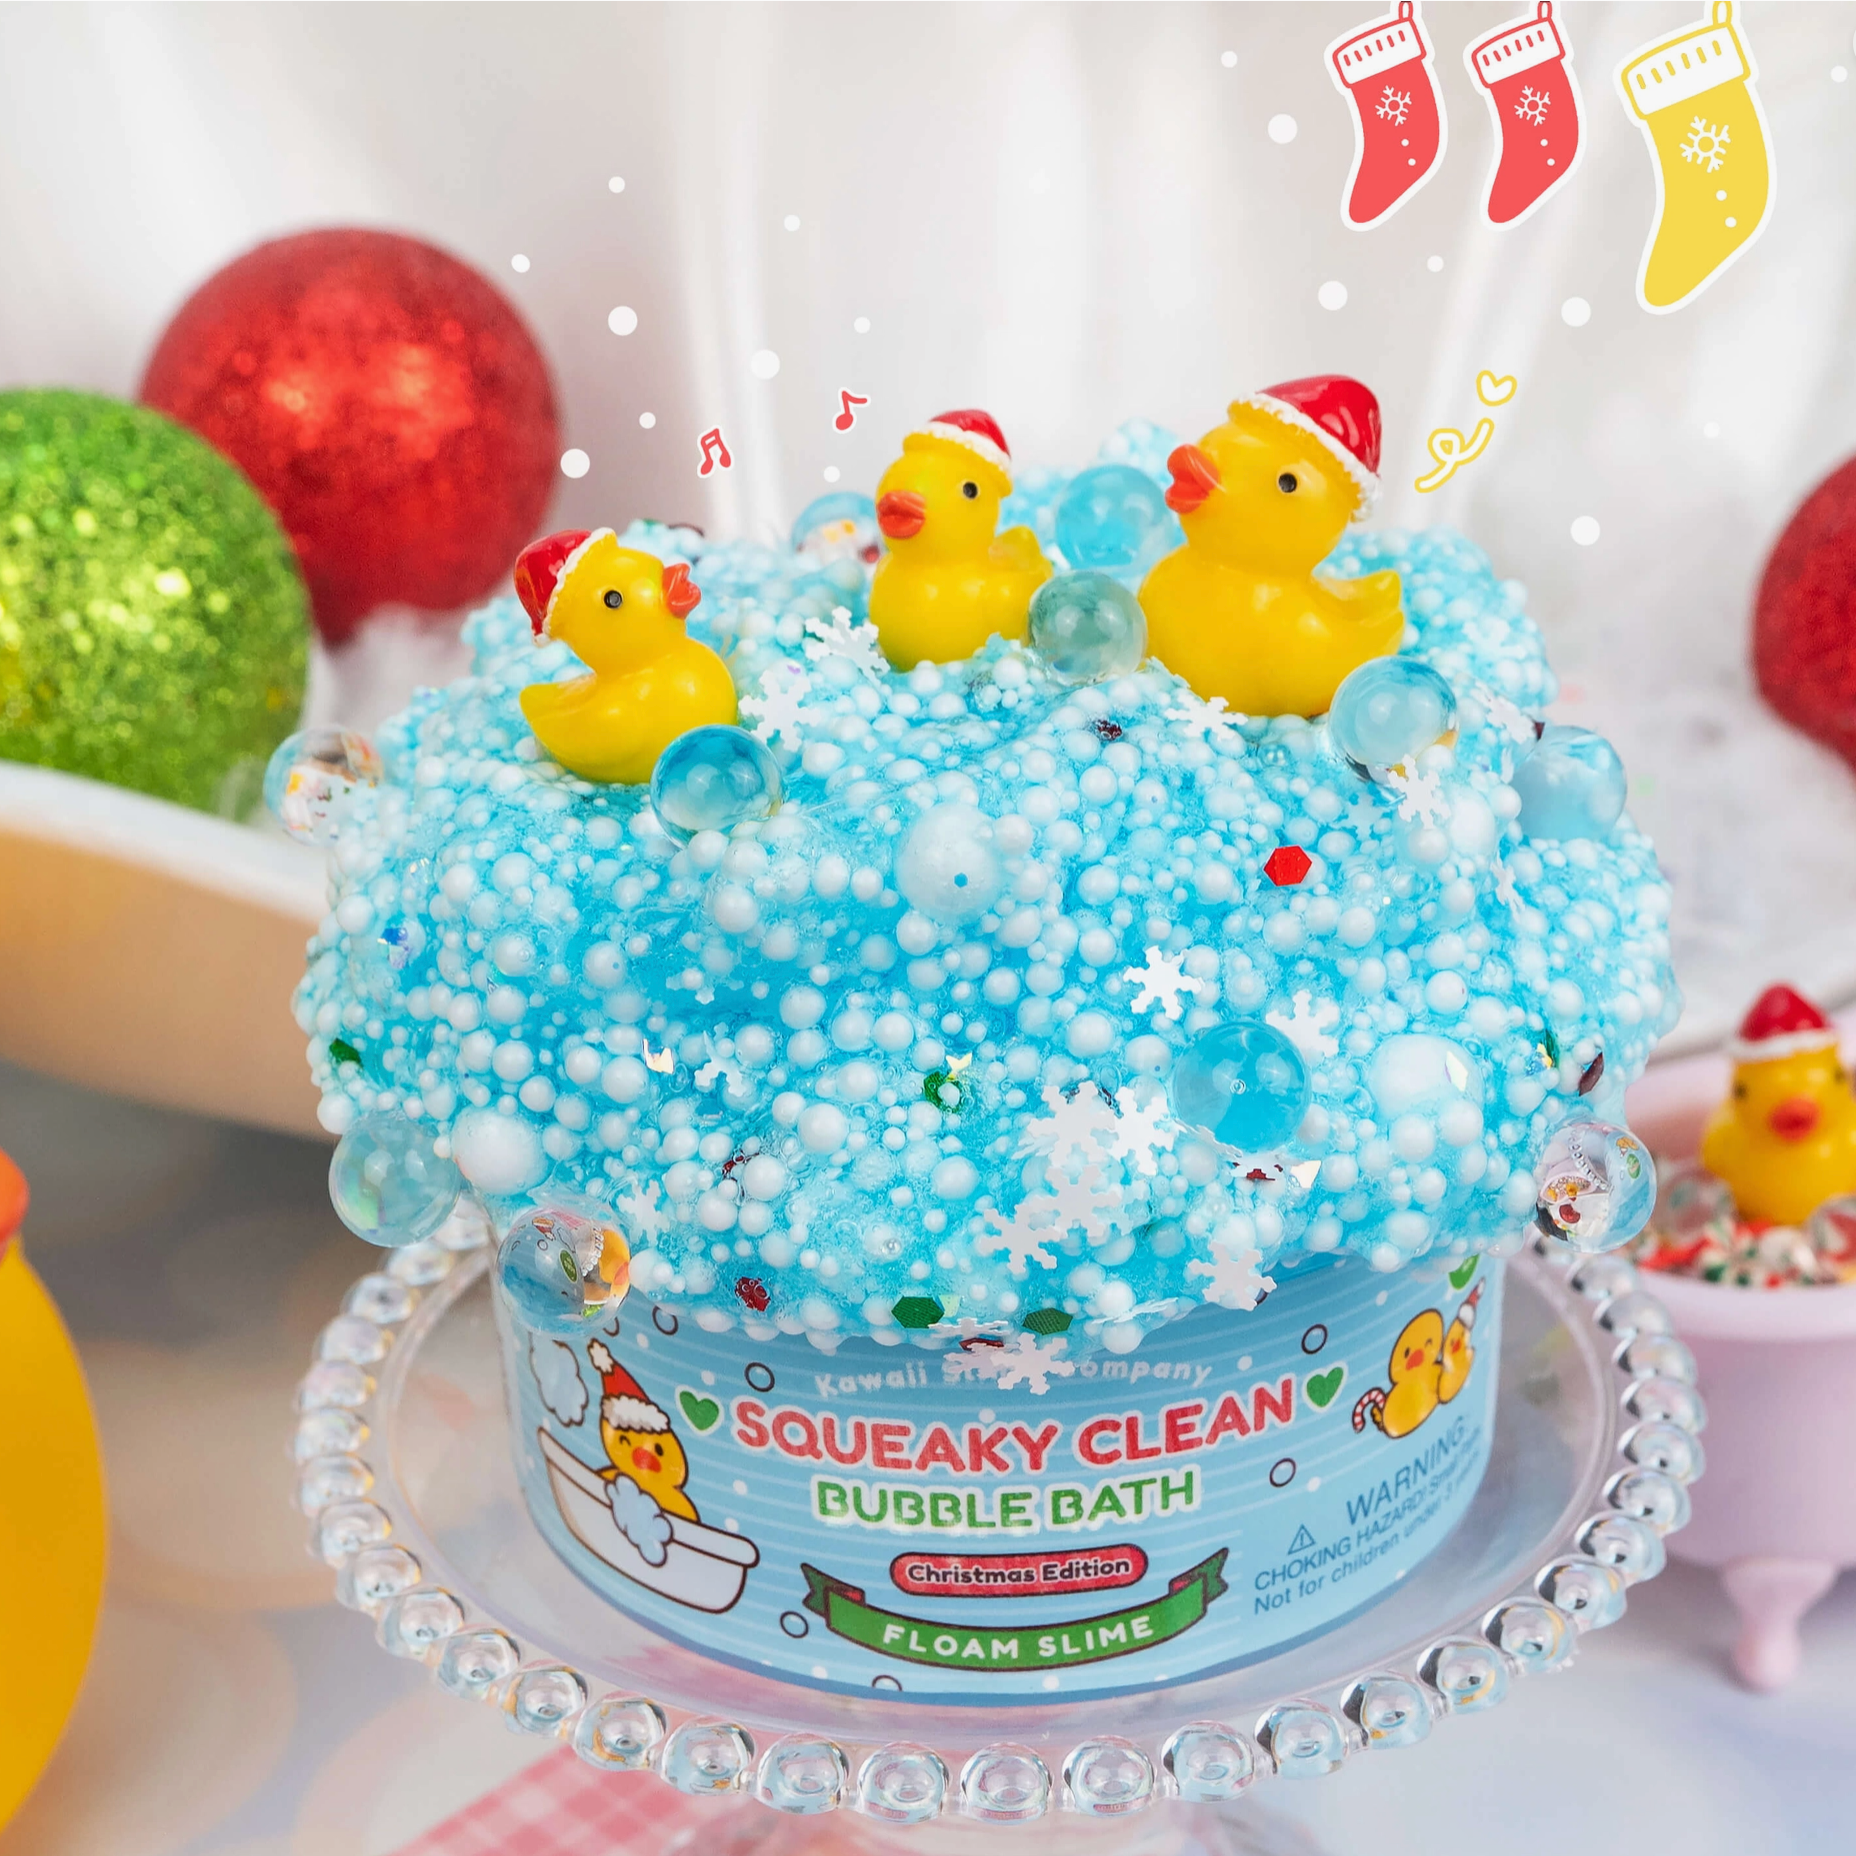 Christmas Squeaky Clean Bubble Bath Foam Slime